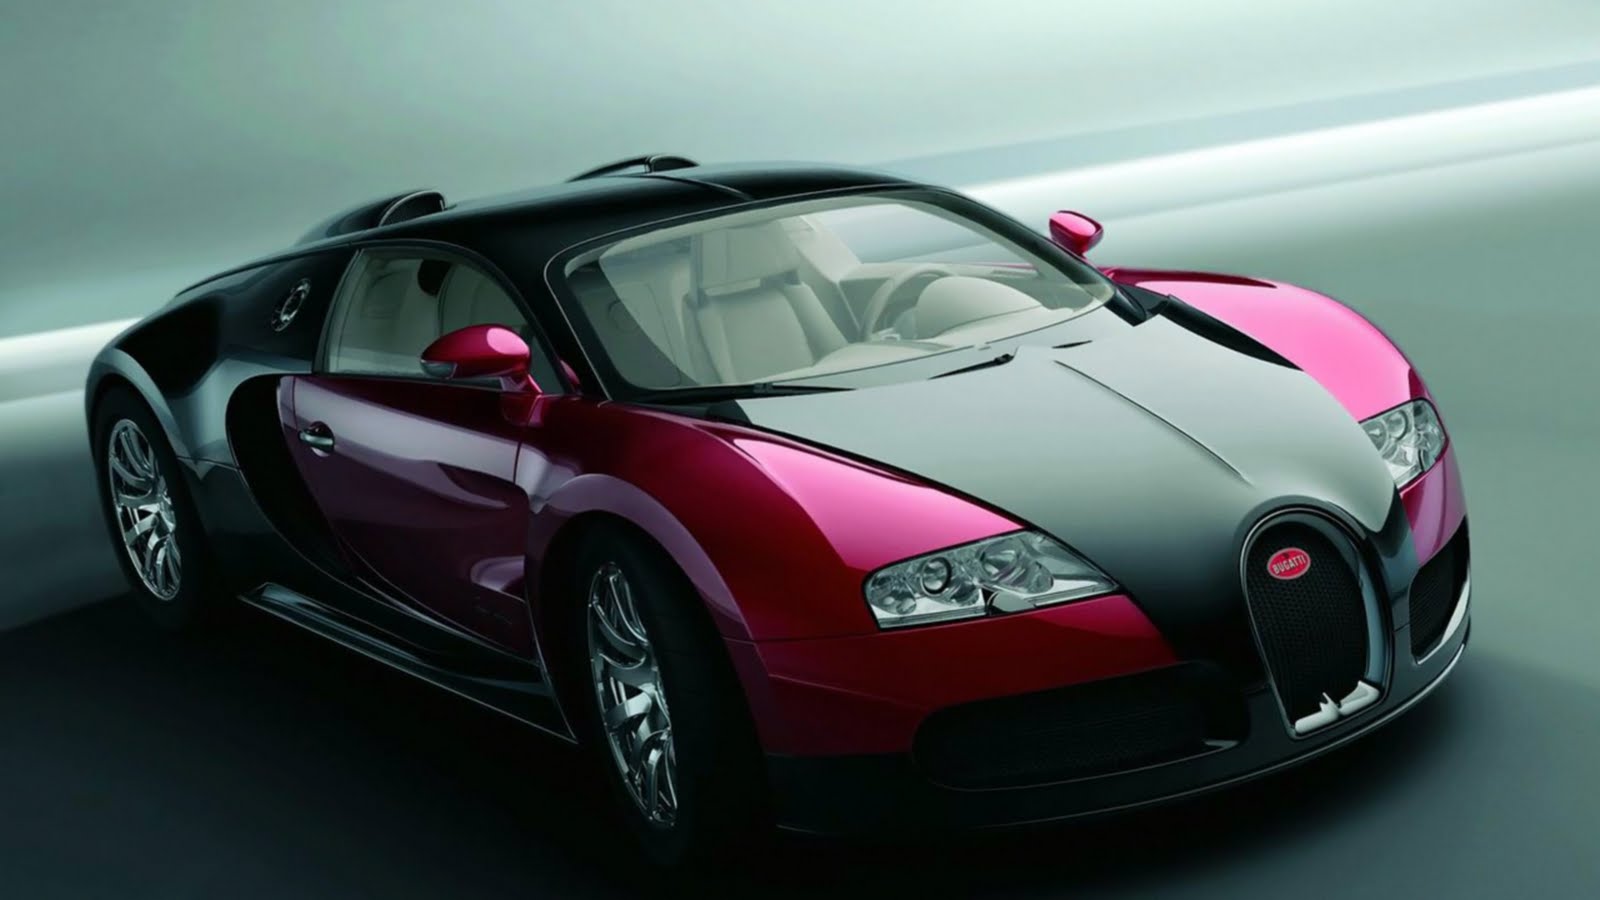 Sports Car S Racing Luxury Cars N 93315 Wallpaper Wallpaper - Car Wallpaper Hd Download For Mobile - HD Wallpaper 